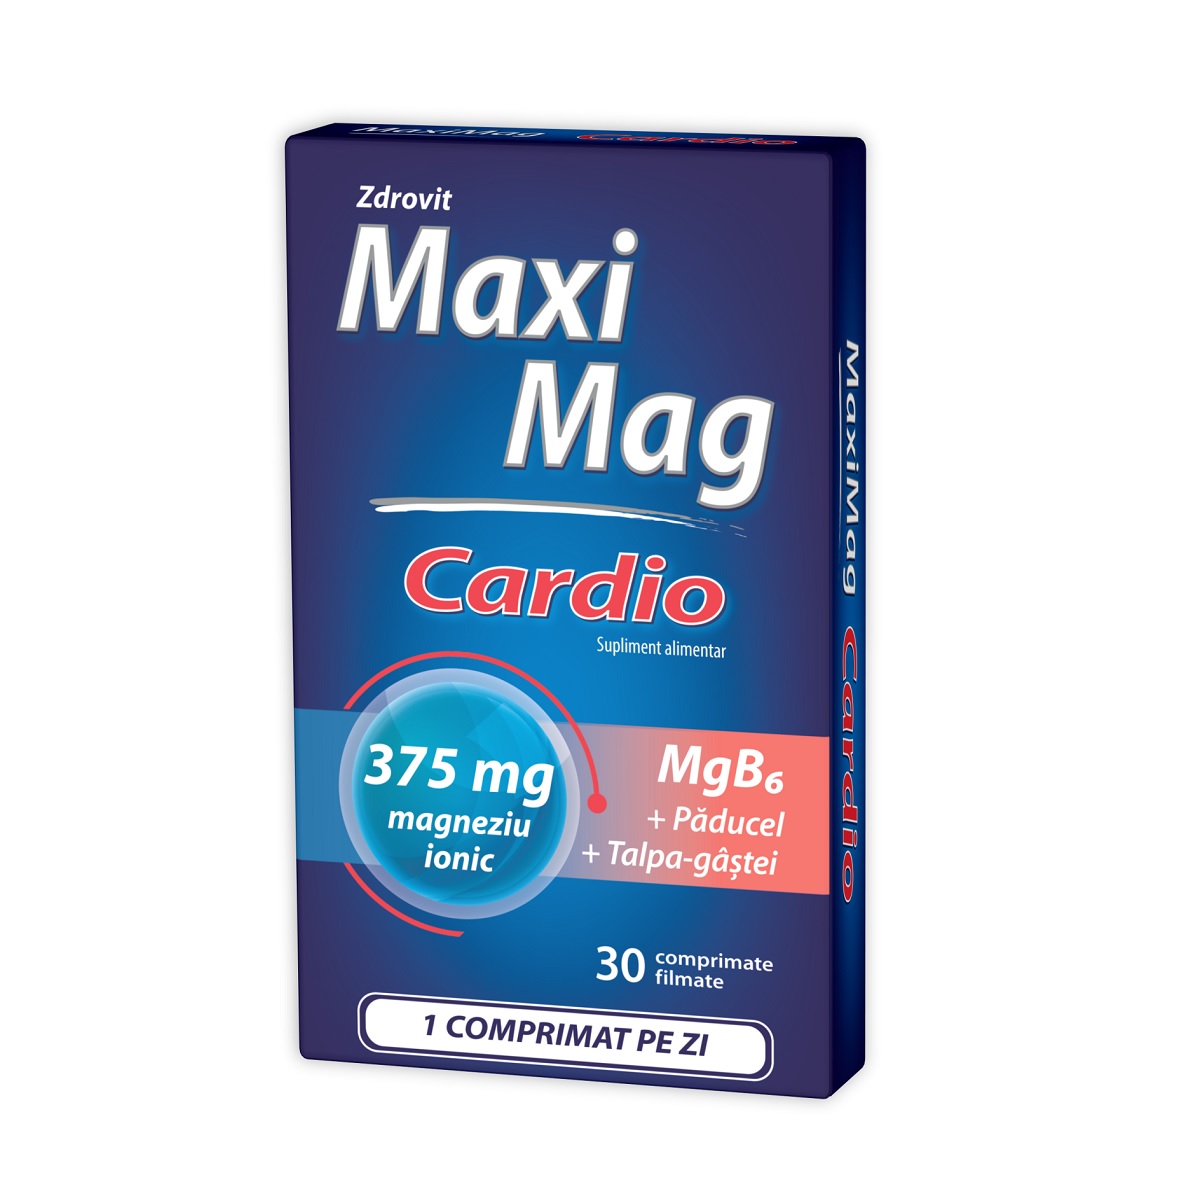 Cardiologie - Maximag cardio x 30 comprimate, medik-on.ro